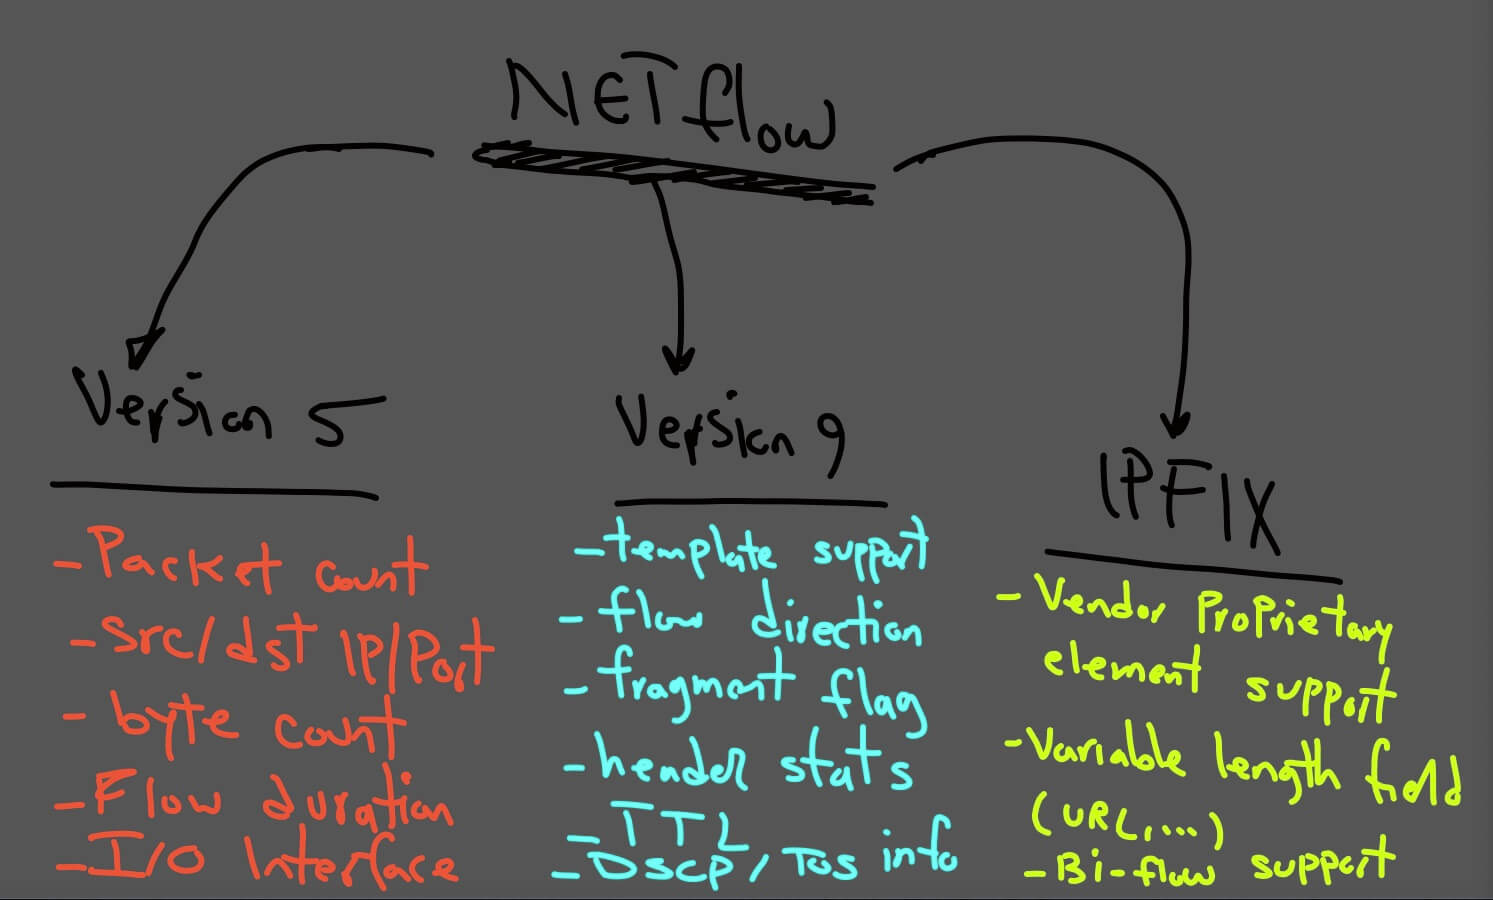 netflow versions